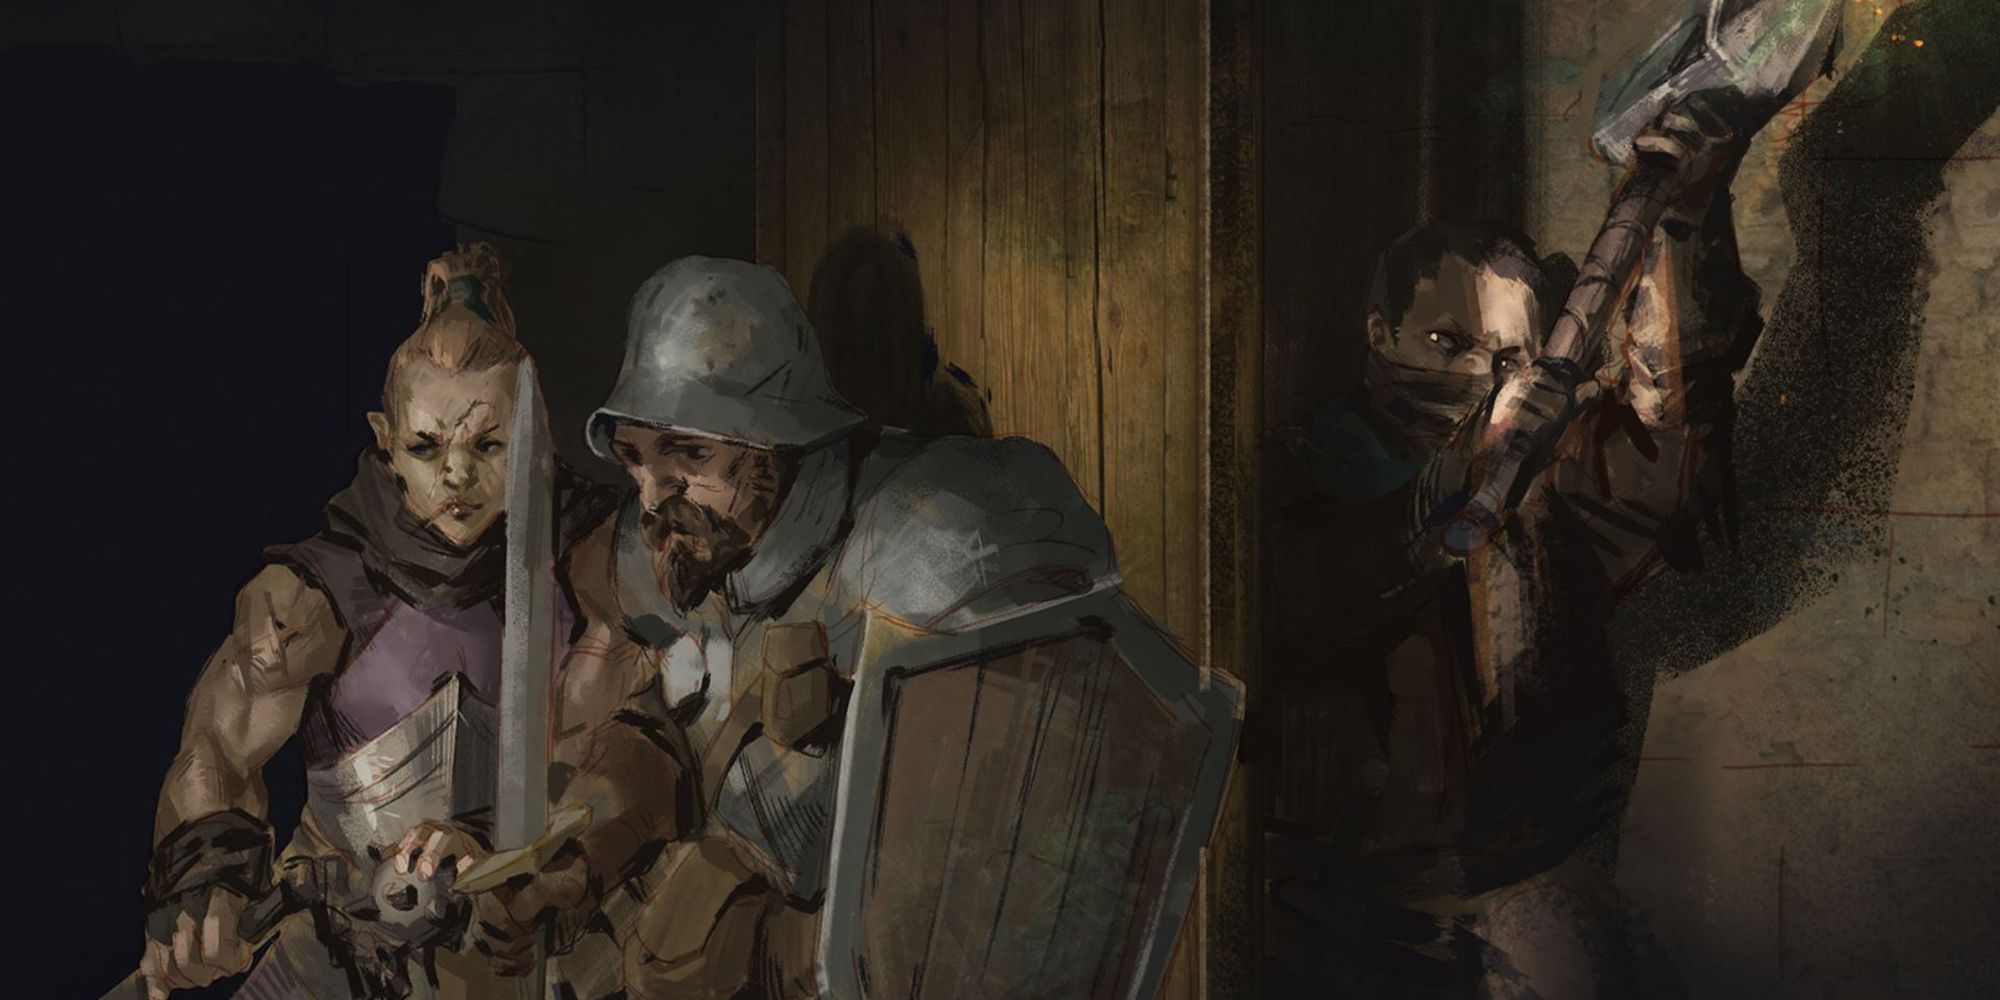 Dark & Darker soldiers hiding while a man comes around the corner swinging a hammer